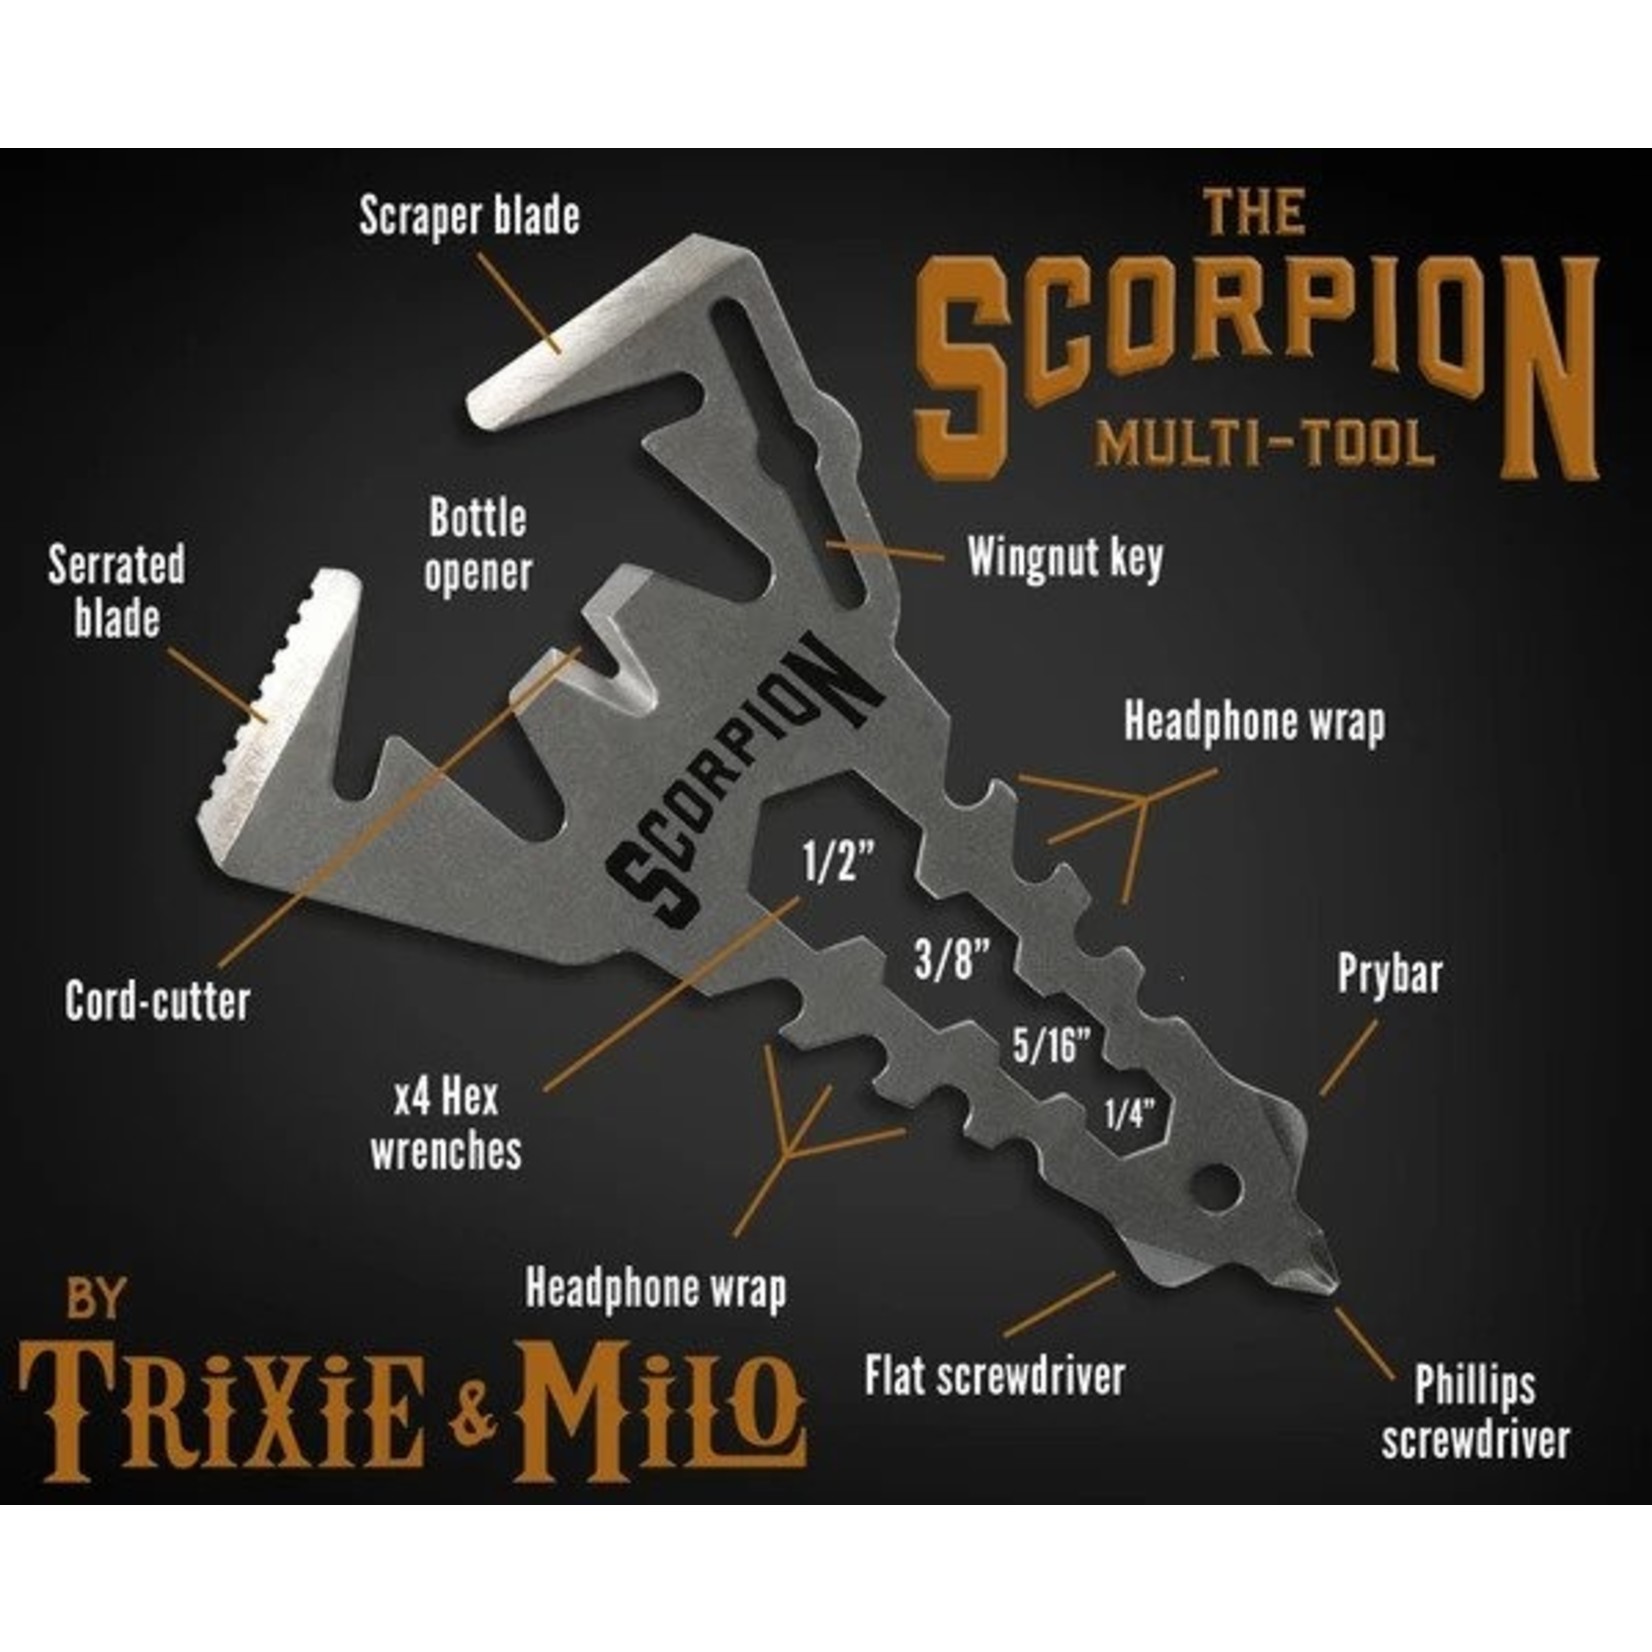 Trixie & Milo Scorpion Multi-Tool